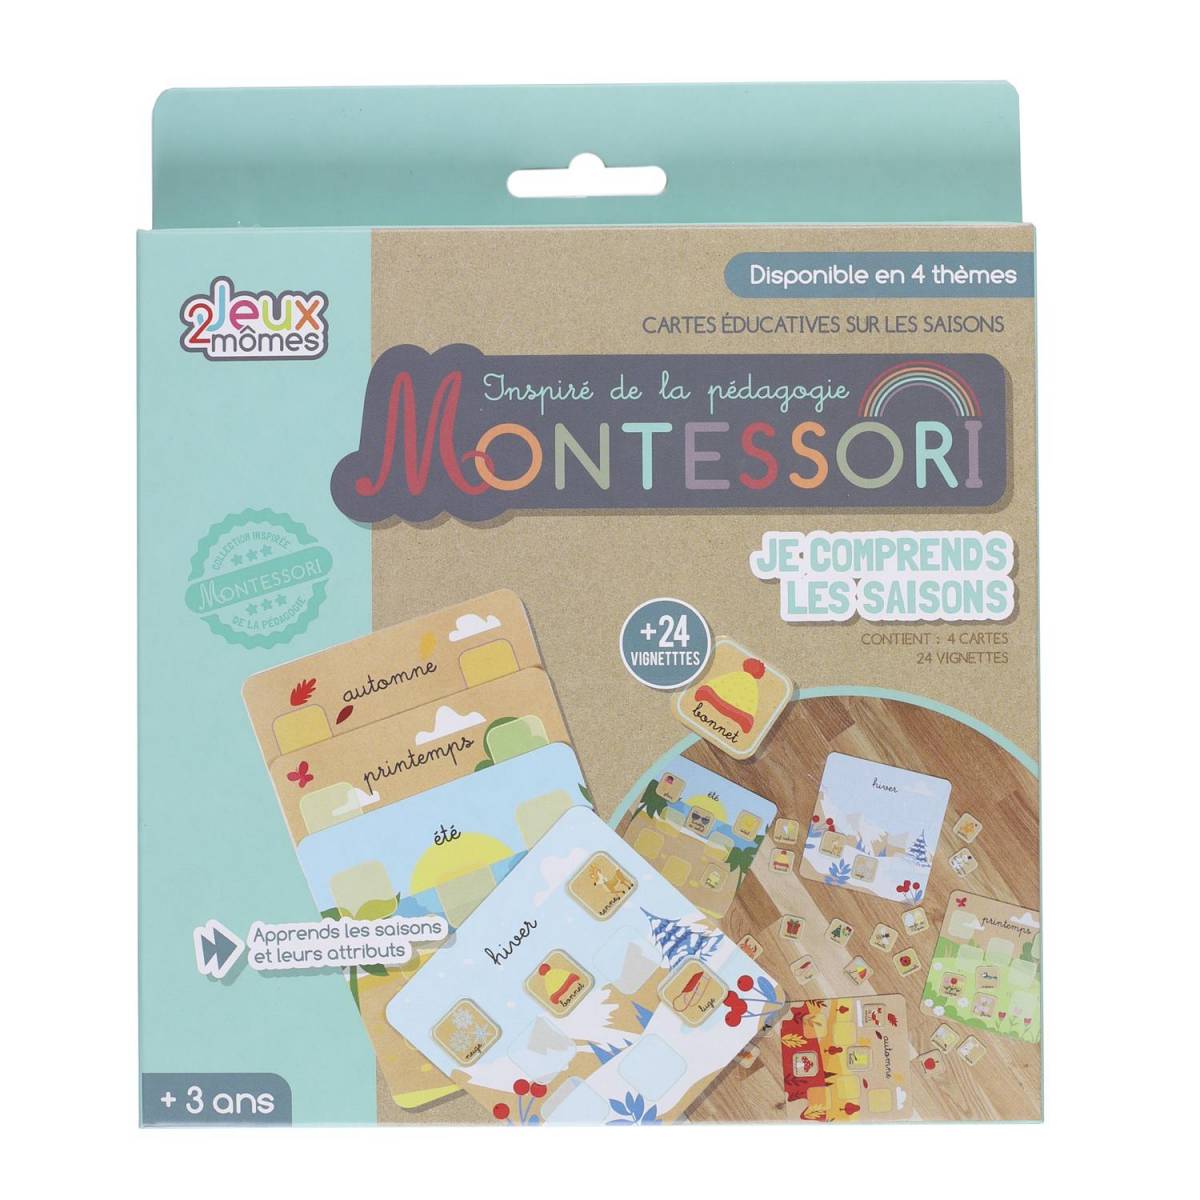 I Understand the Montessori Seasons